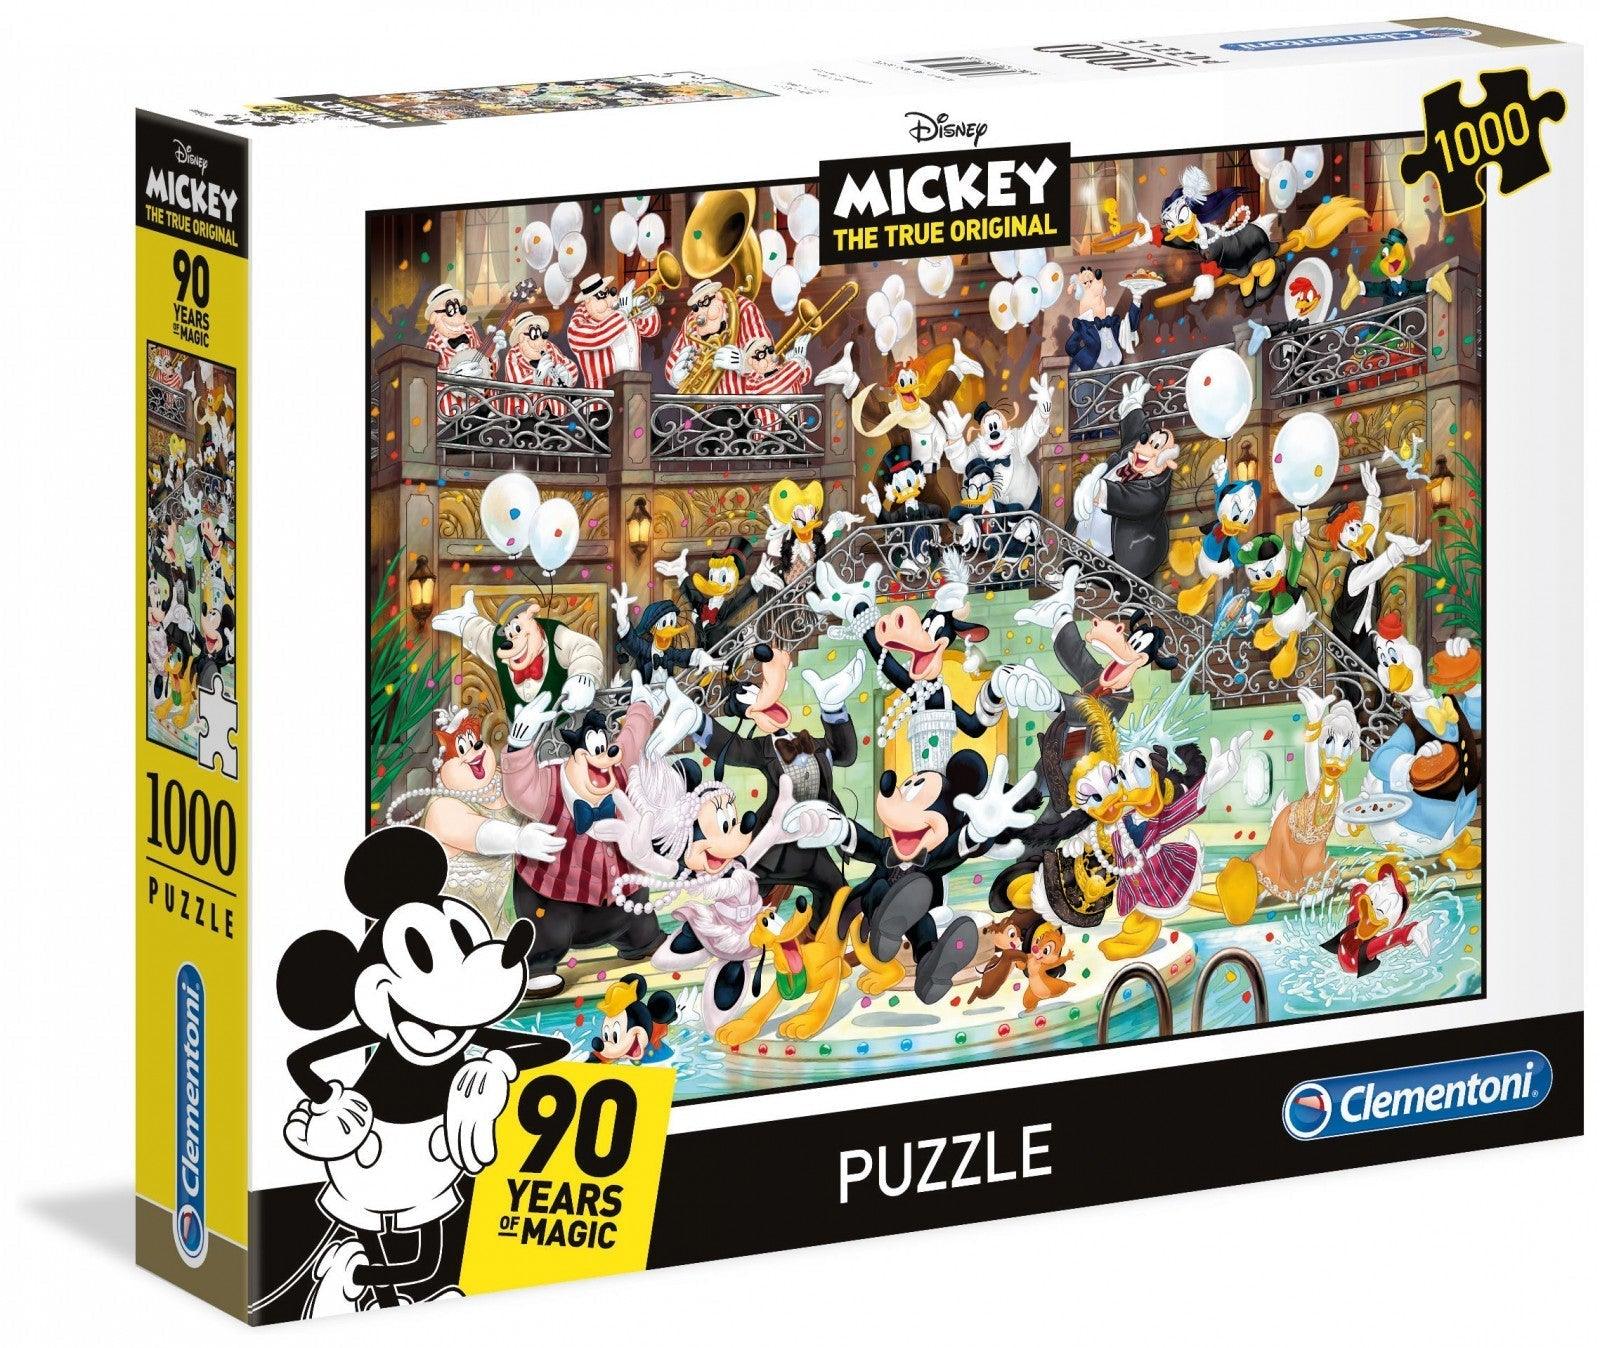 VR-66051 Clementoni Puzzle Disney Mickey Mouse 90 Years of Magic Puzzle 1,000 pieces - Clementoni - Titan Pop Culture